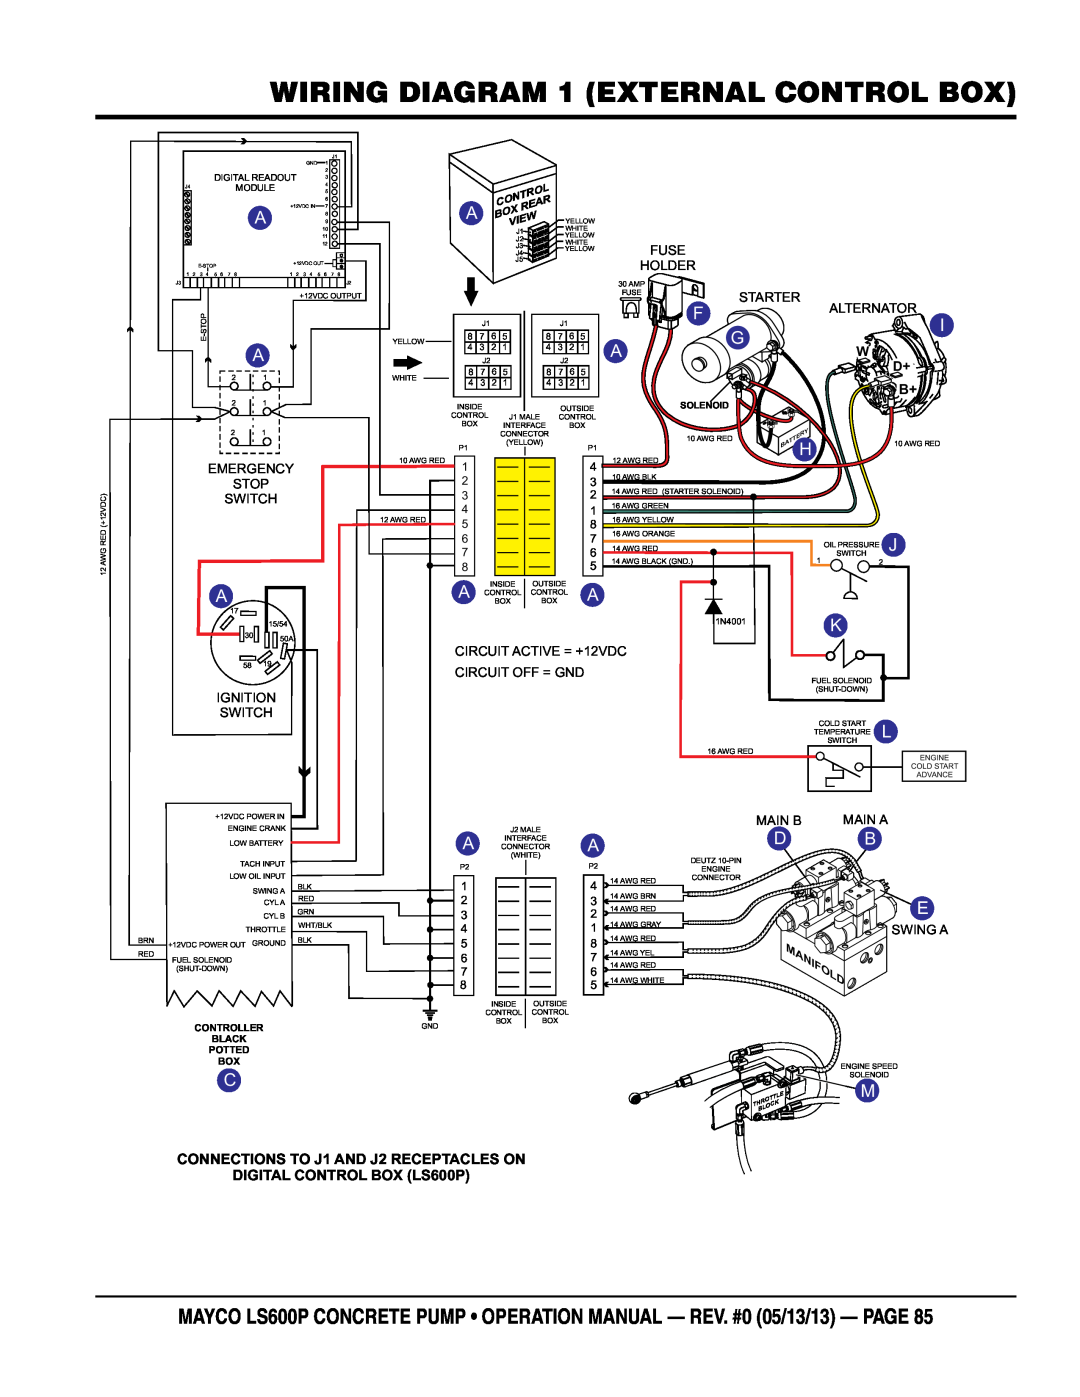 Multiquip LS600P operation manual wiring diagram 1 EXTERNAL control box, Manifold 